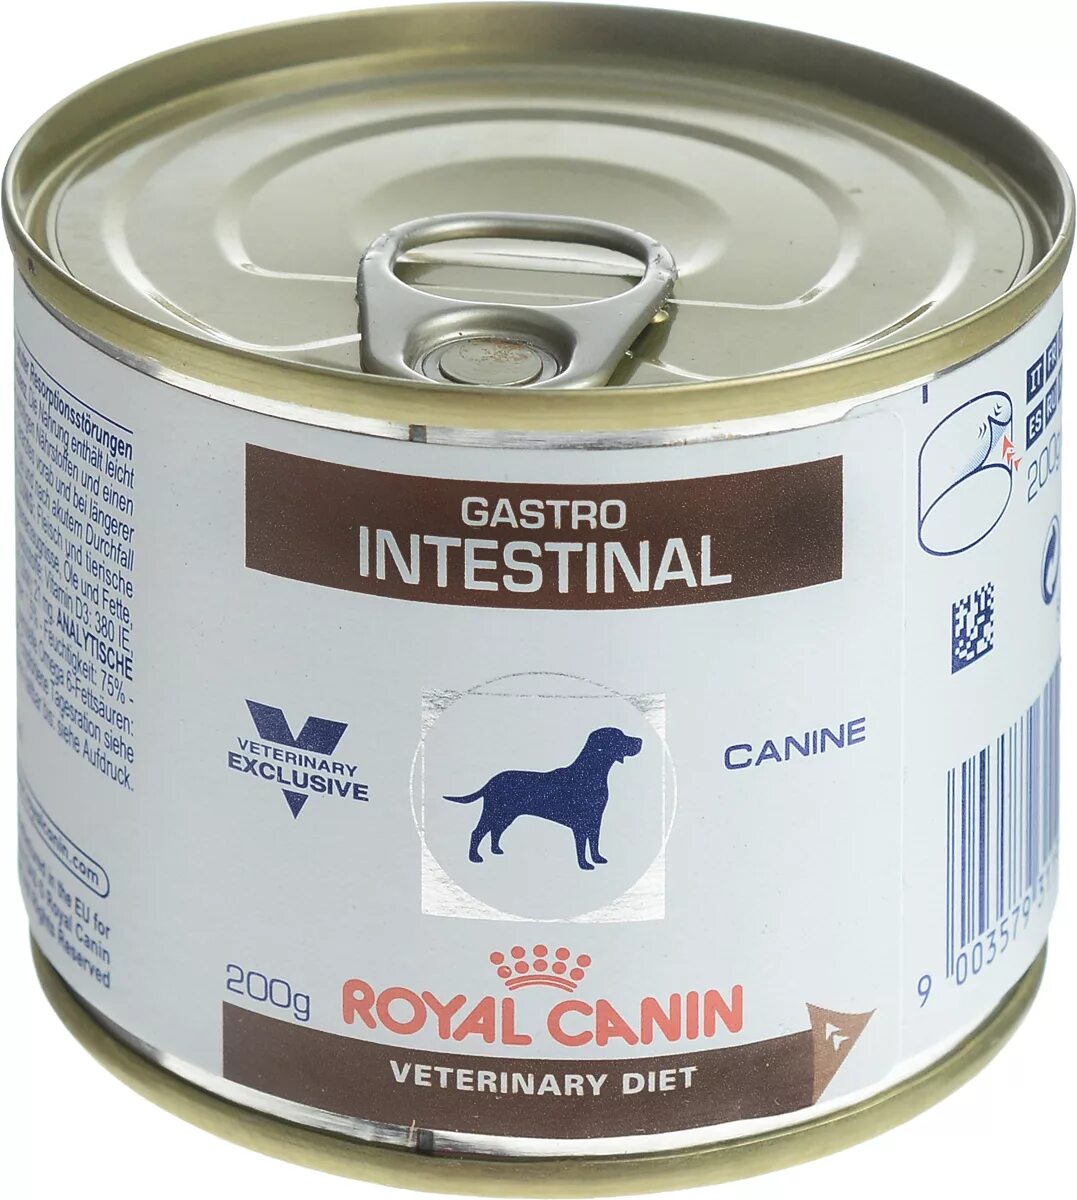 Clan gastrointestinal. Корм Роял Канин гастро Интестинал. Royal Canin гастро Интестинал. Роял Канин Gastro intestinal для собак. Gastrointestinal для собак консервы Роял Канин.